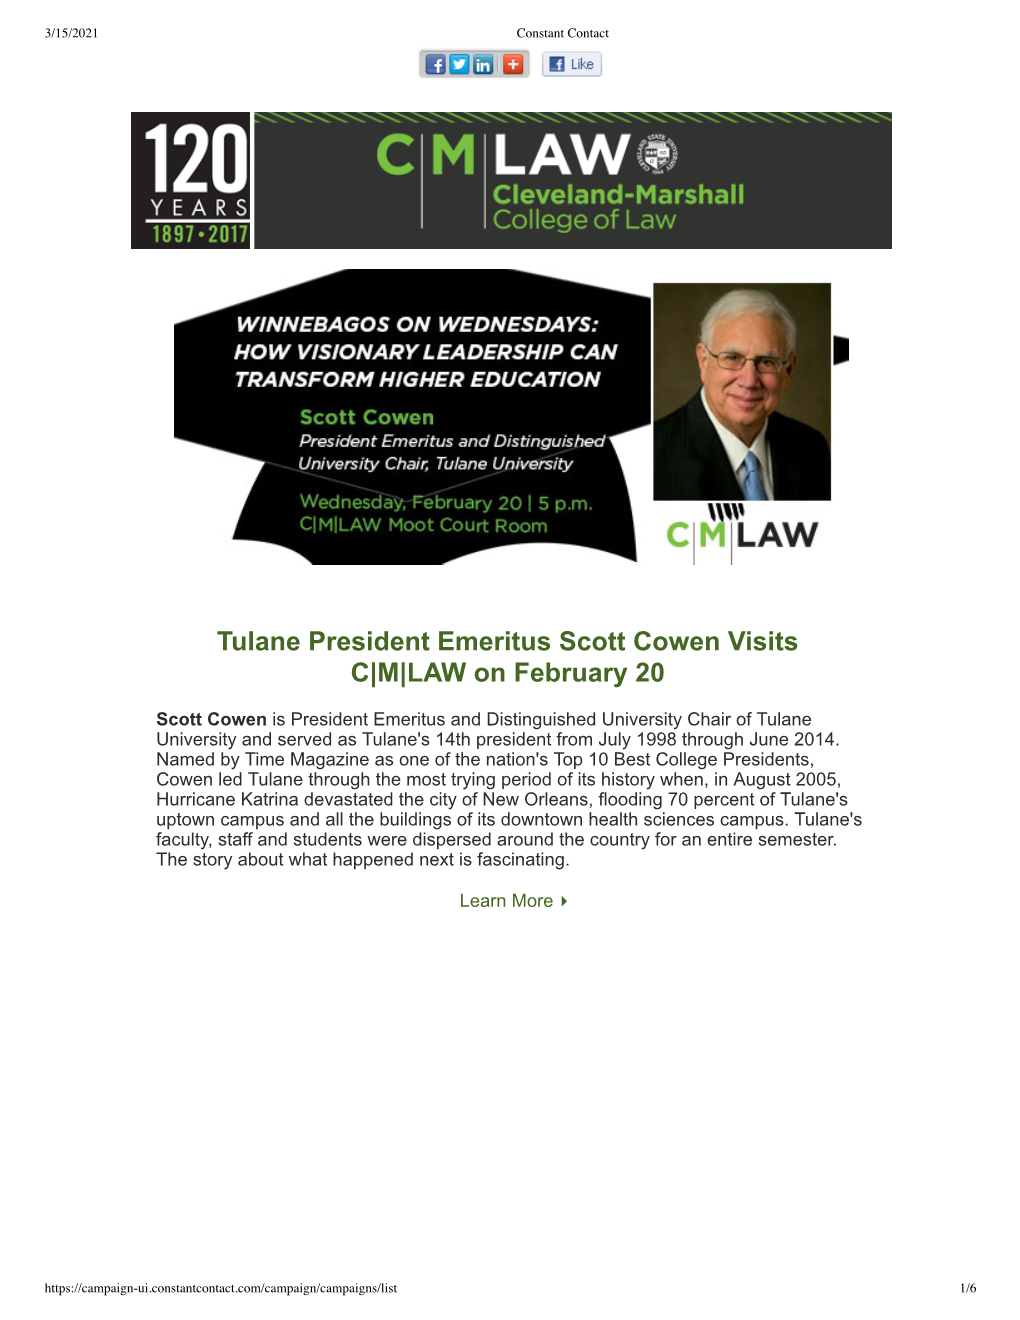 Tulane President Emeritus Scott Cowen Visits C|M|LAW on February 20